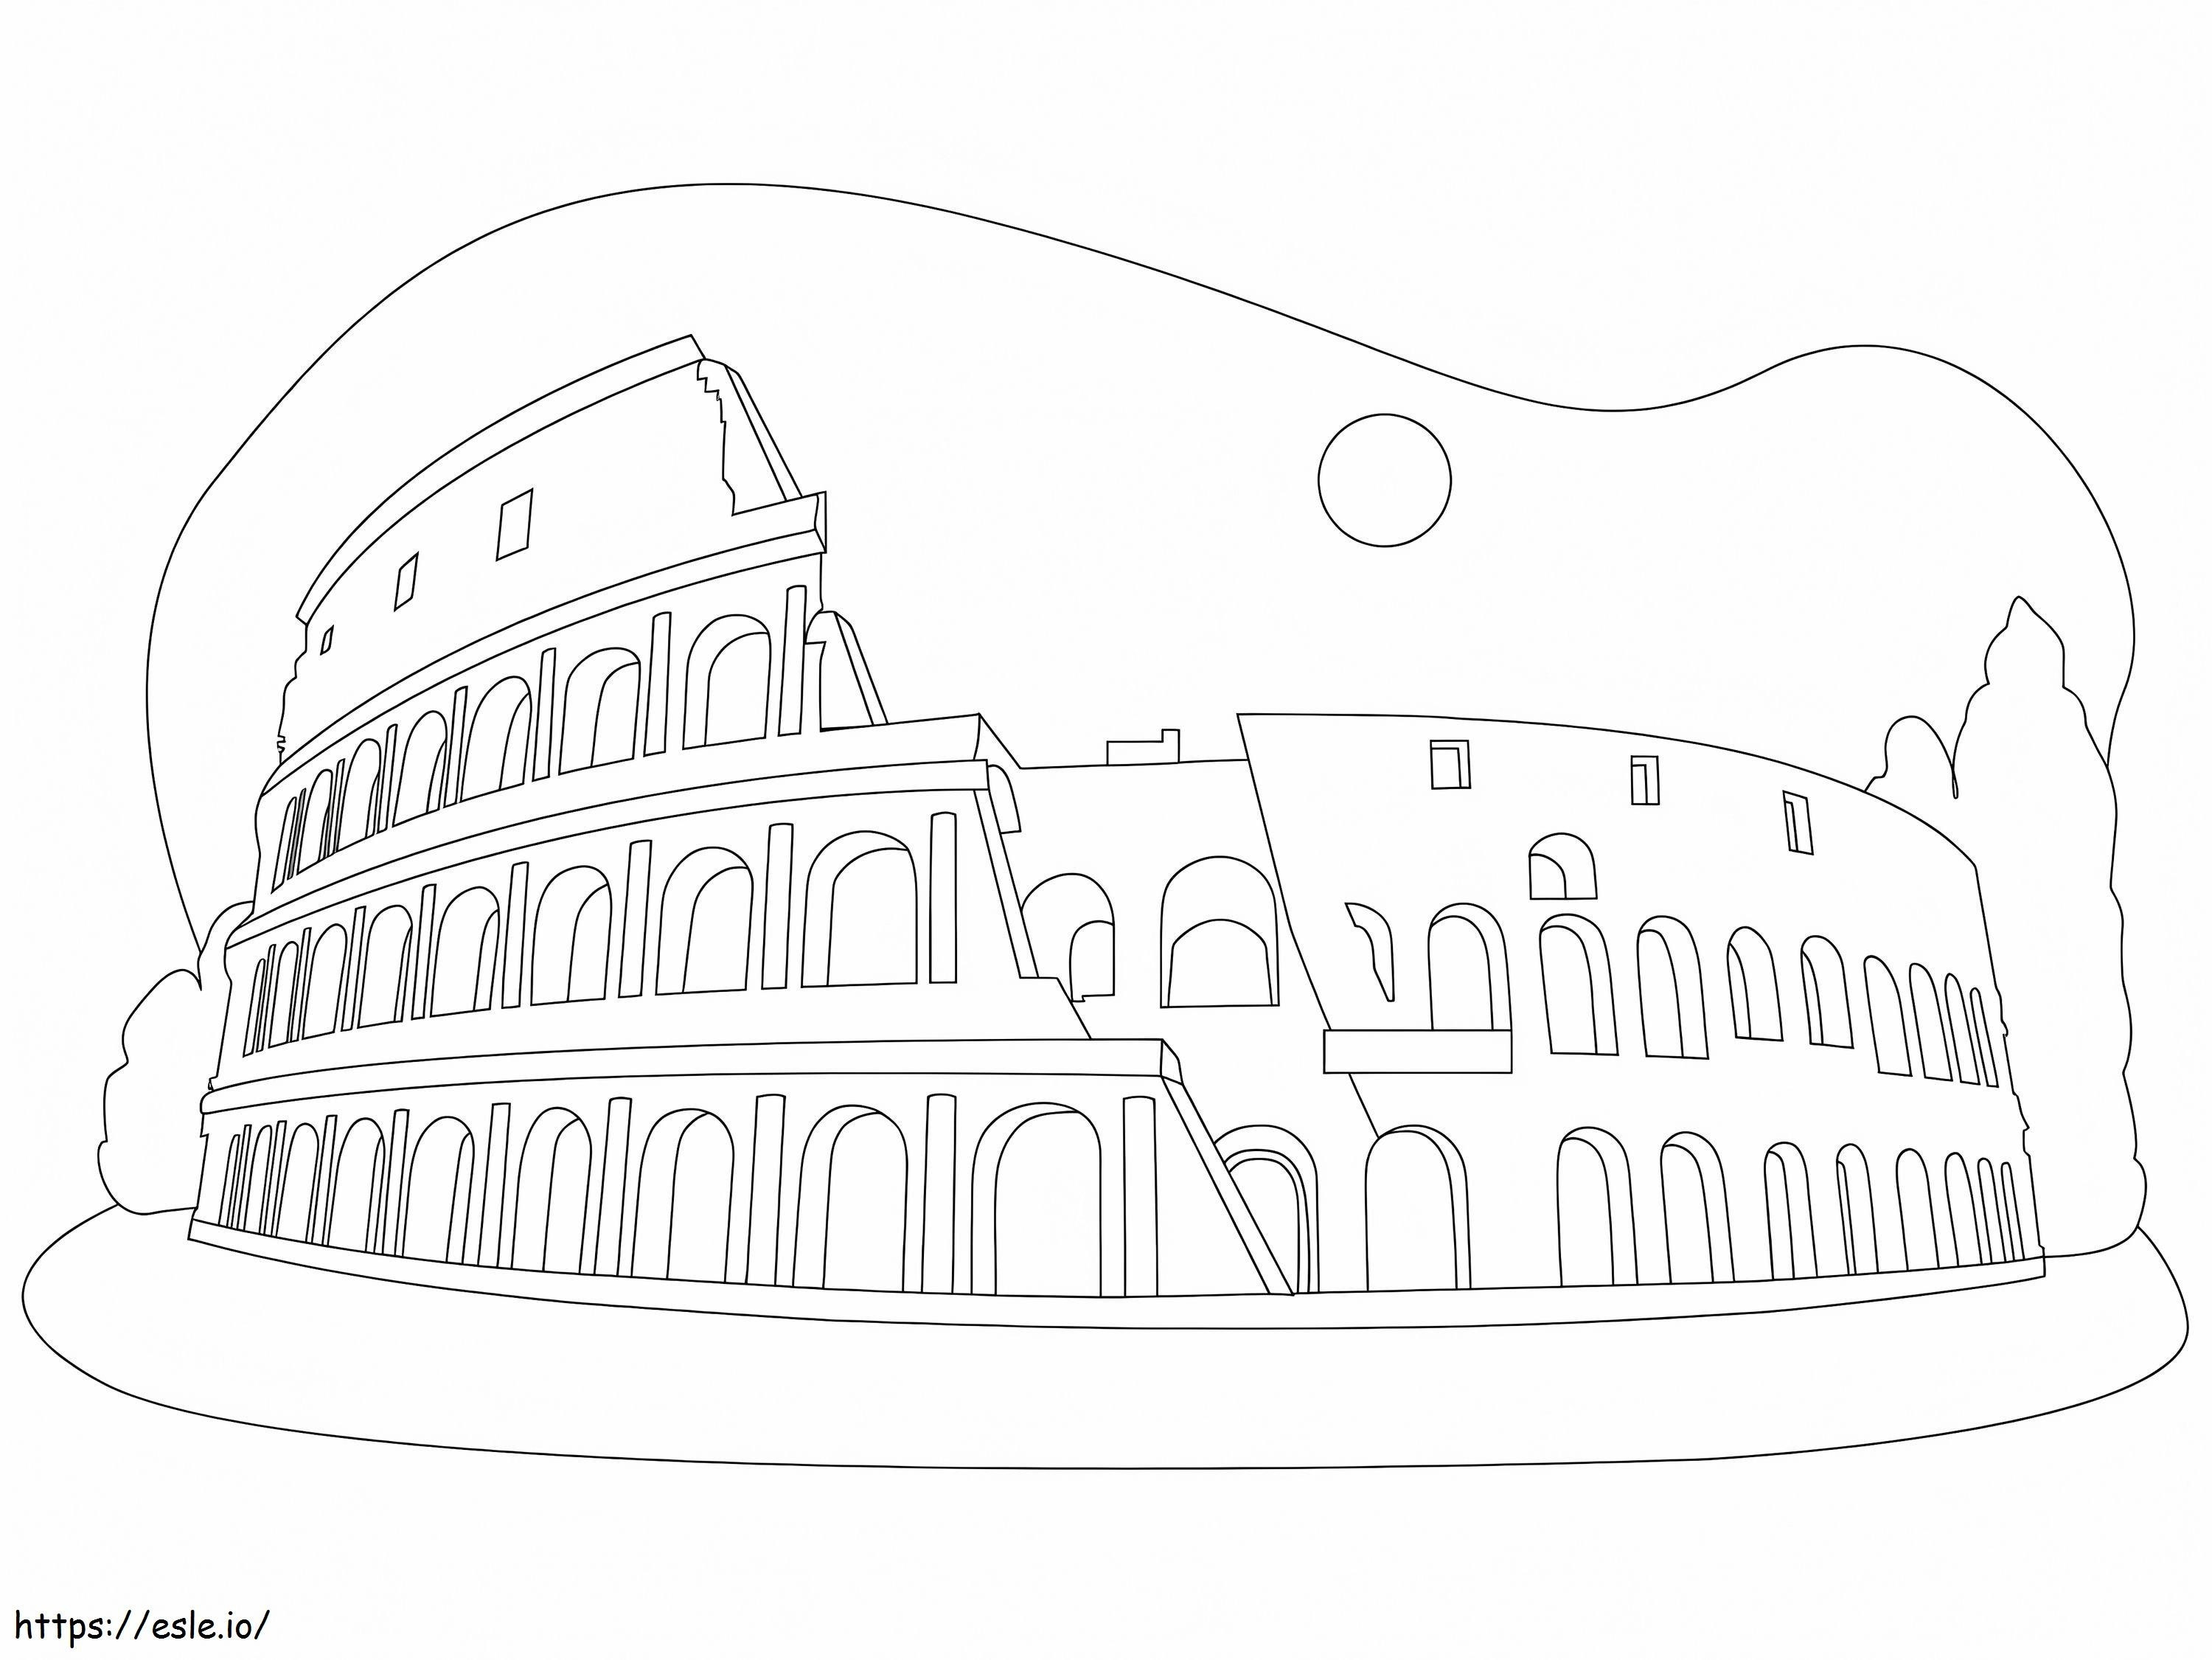 Das Kolosseum ausmalbilder